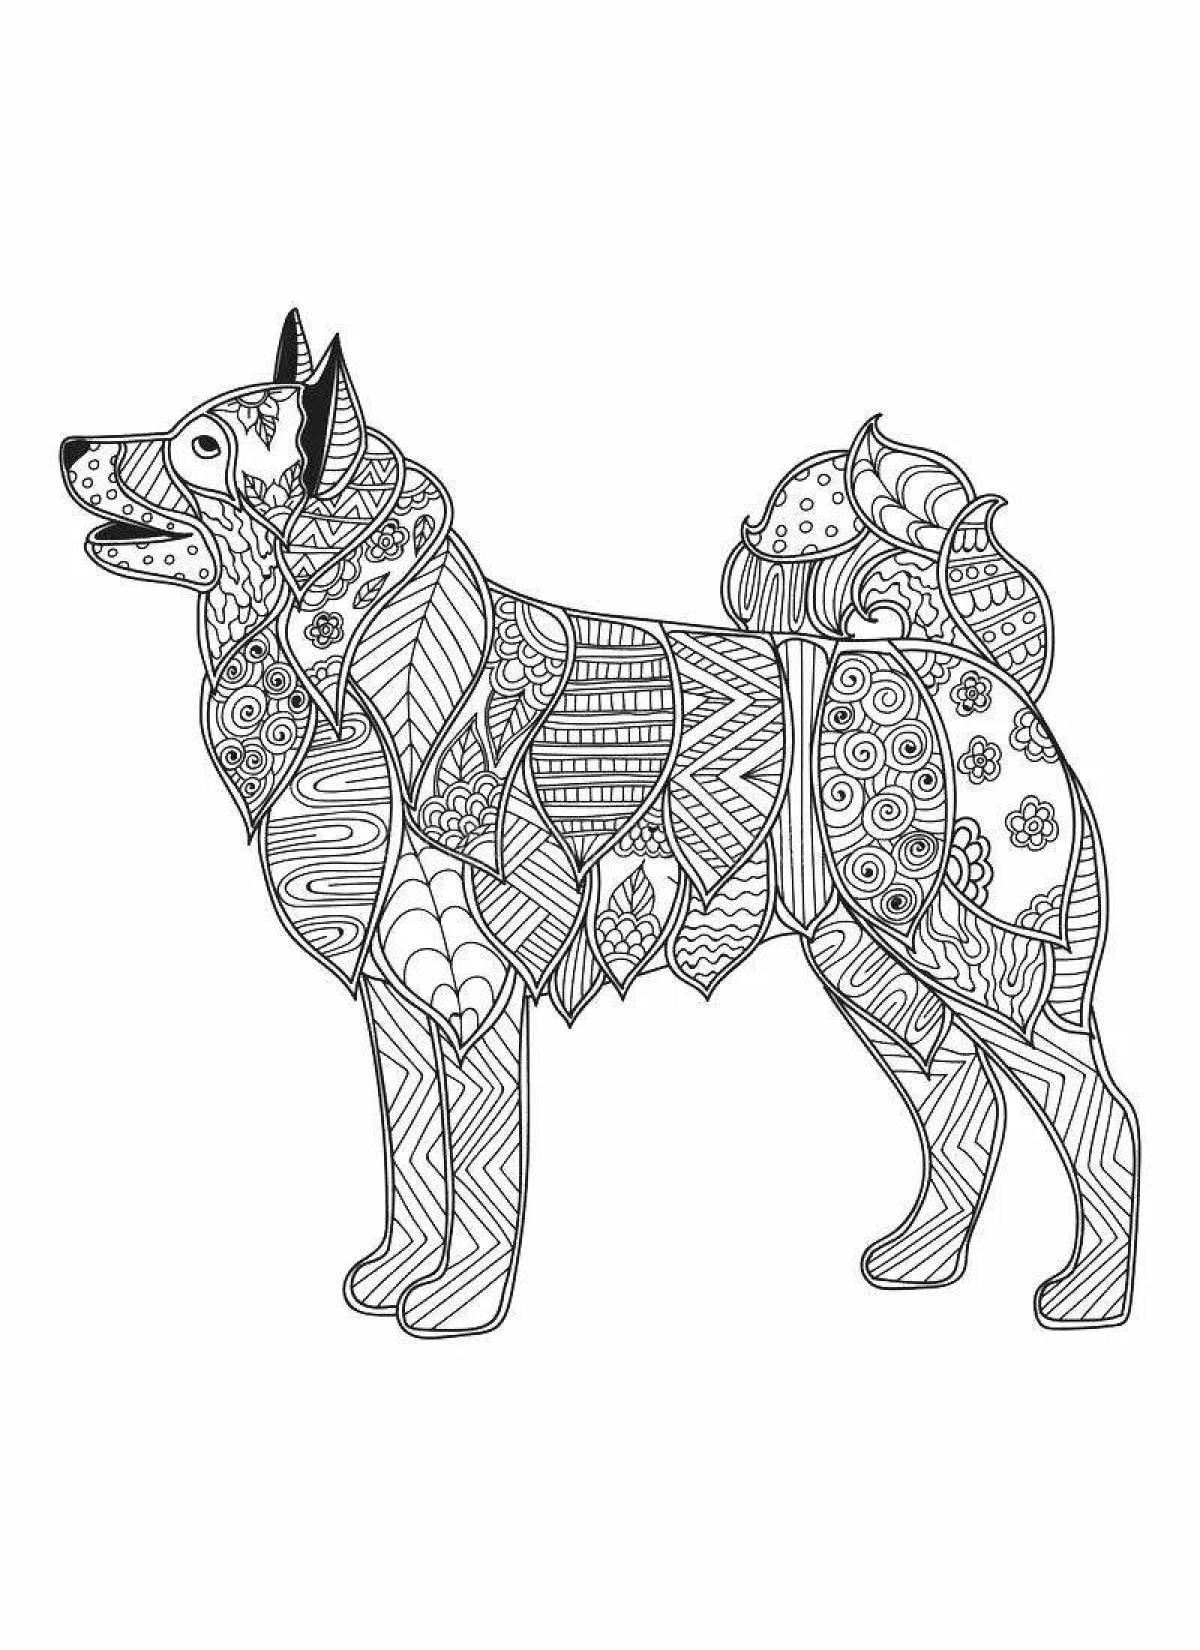 Coloring page joyful patterned dog